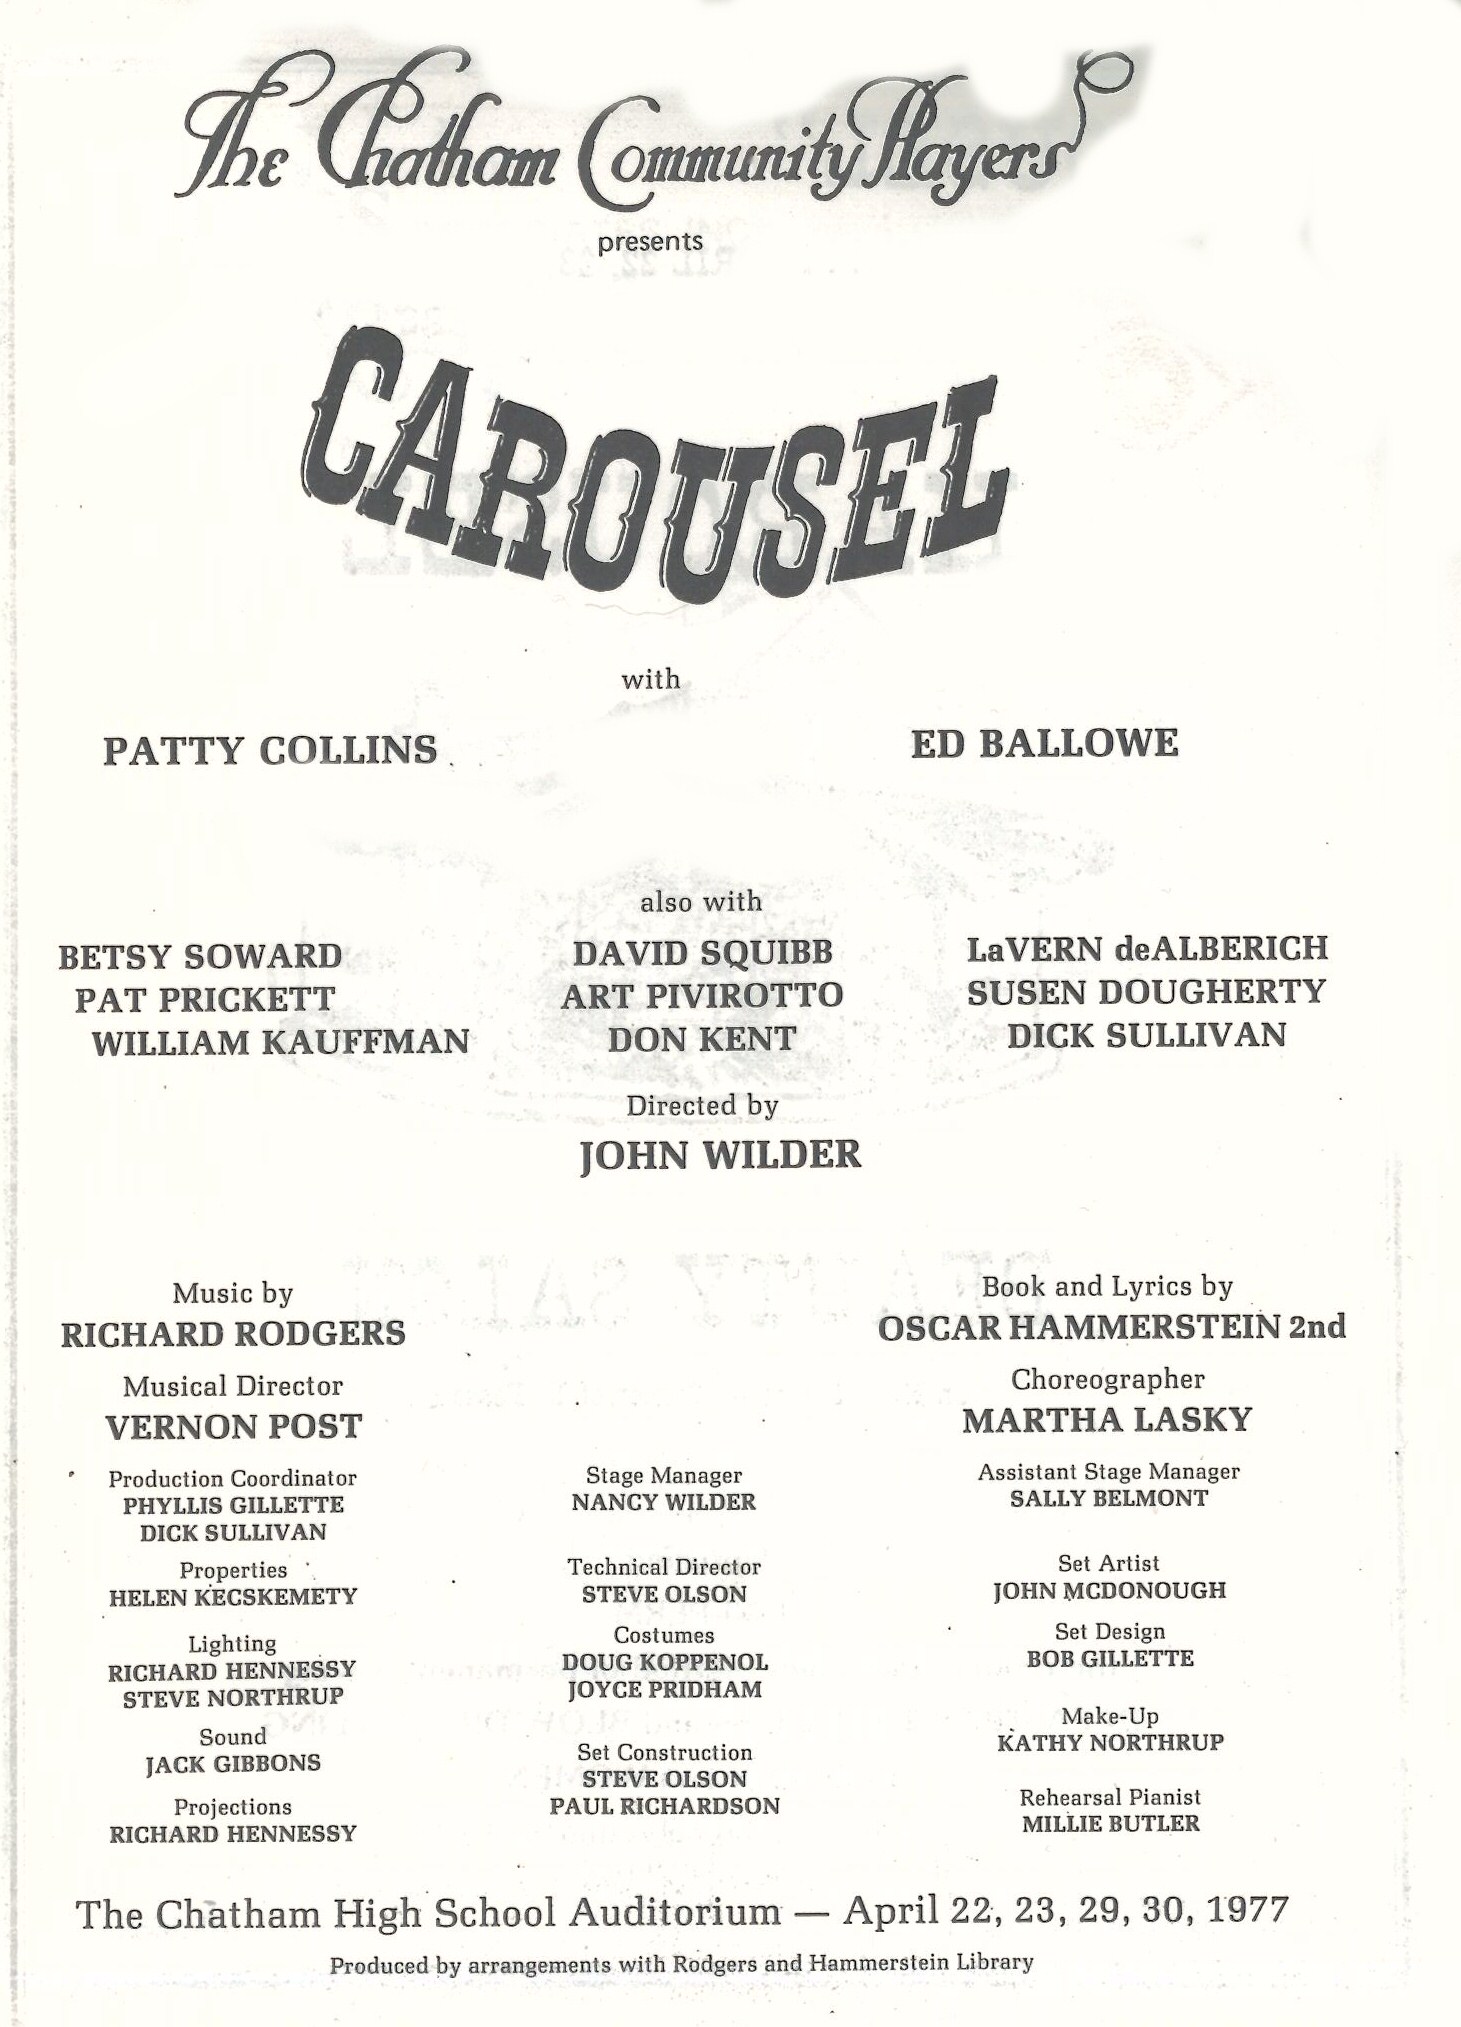 Carousel (1977)